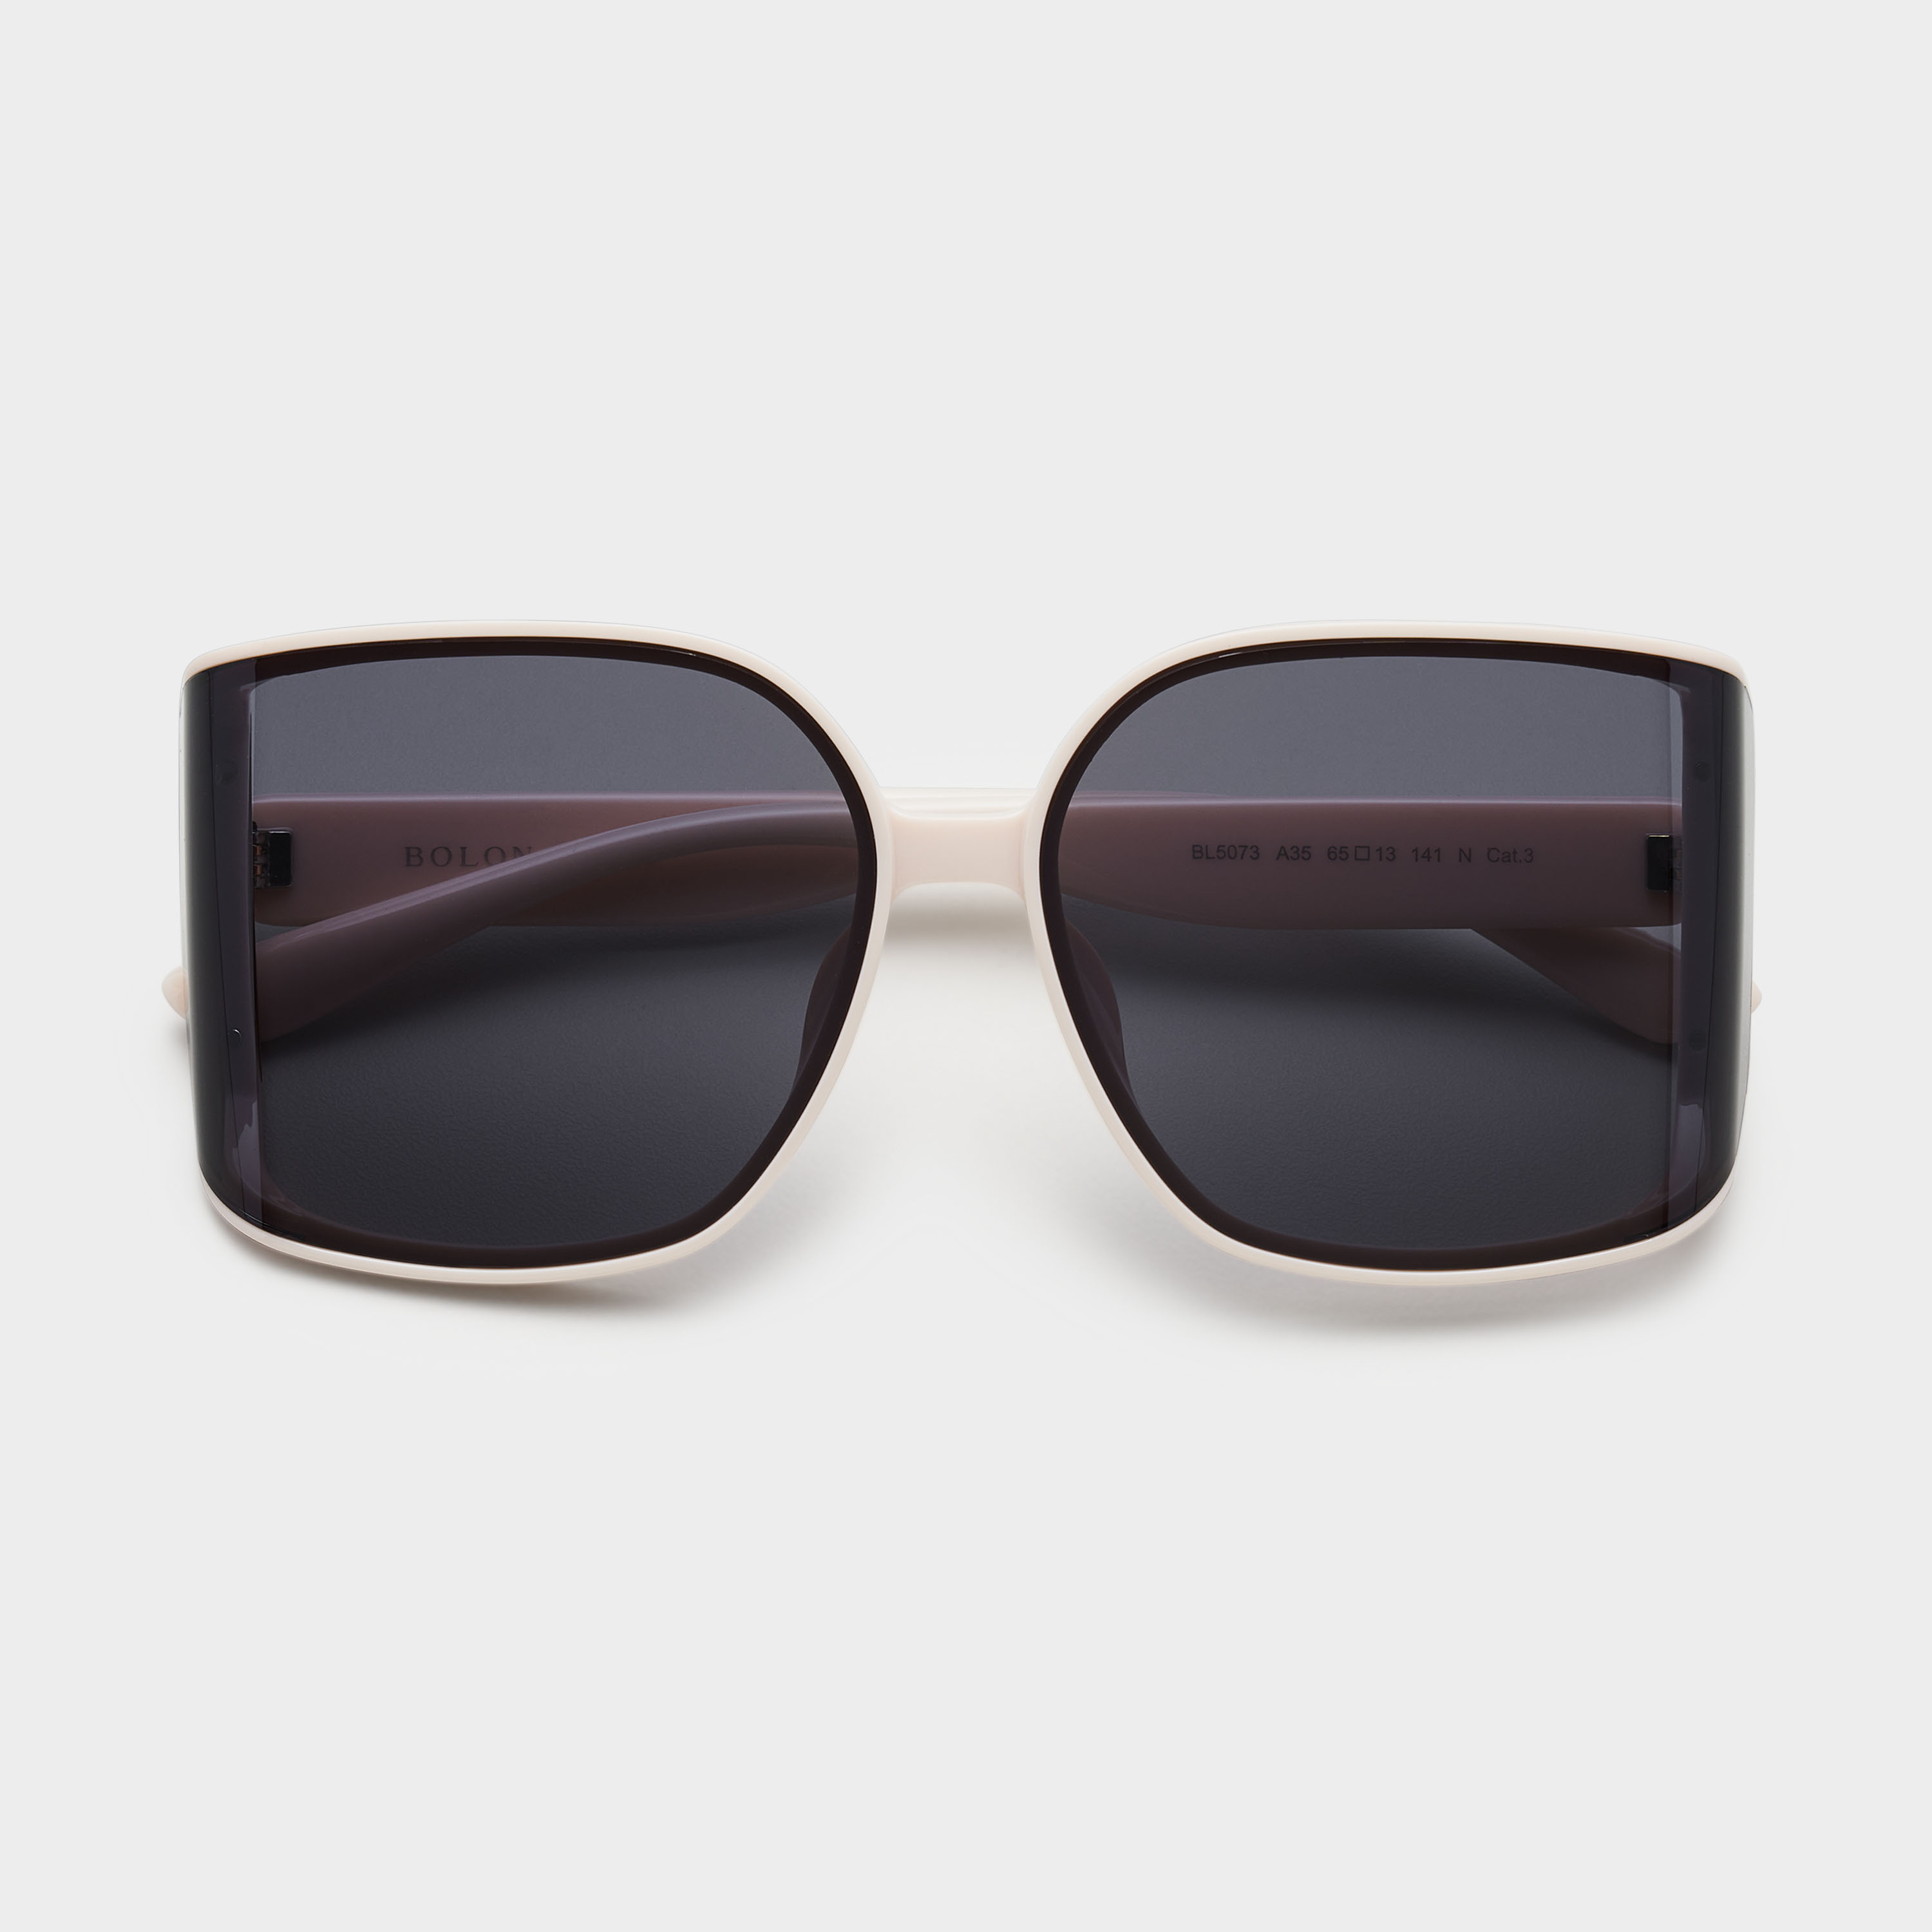 River Island monogram cat eye sunglasses in black